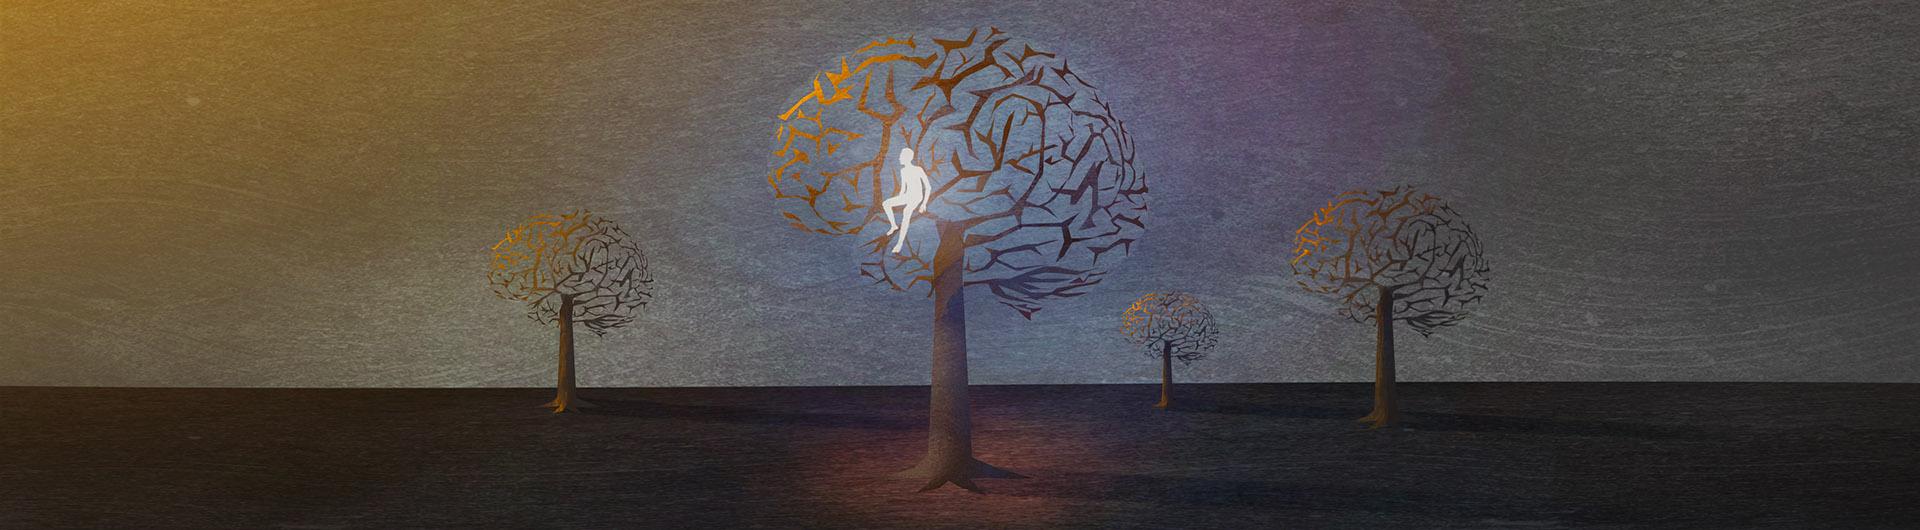 Human figure sitting in tree that looks like brain